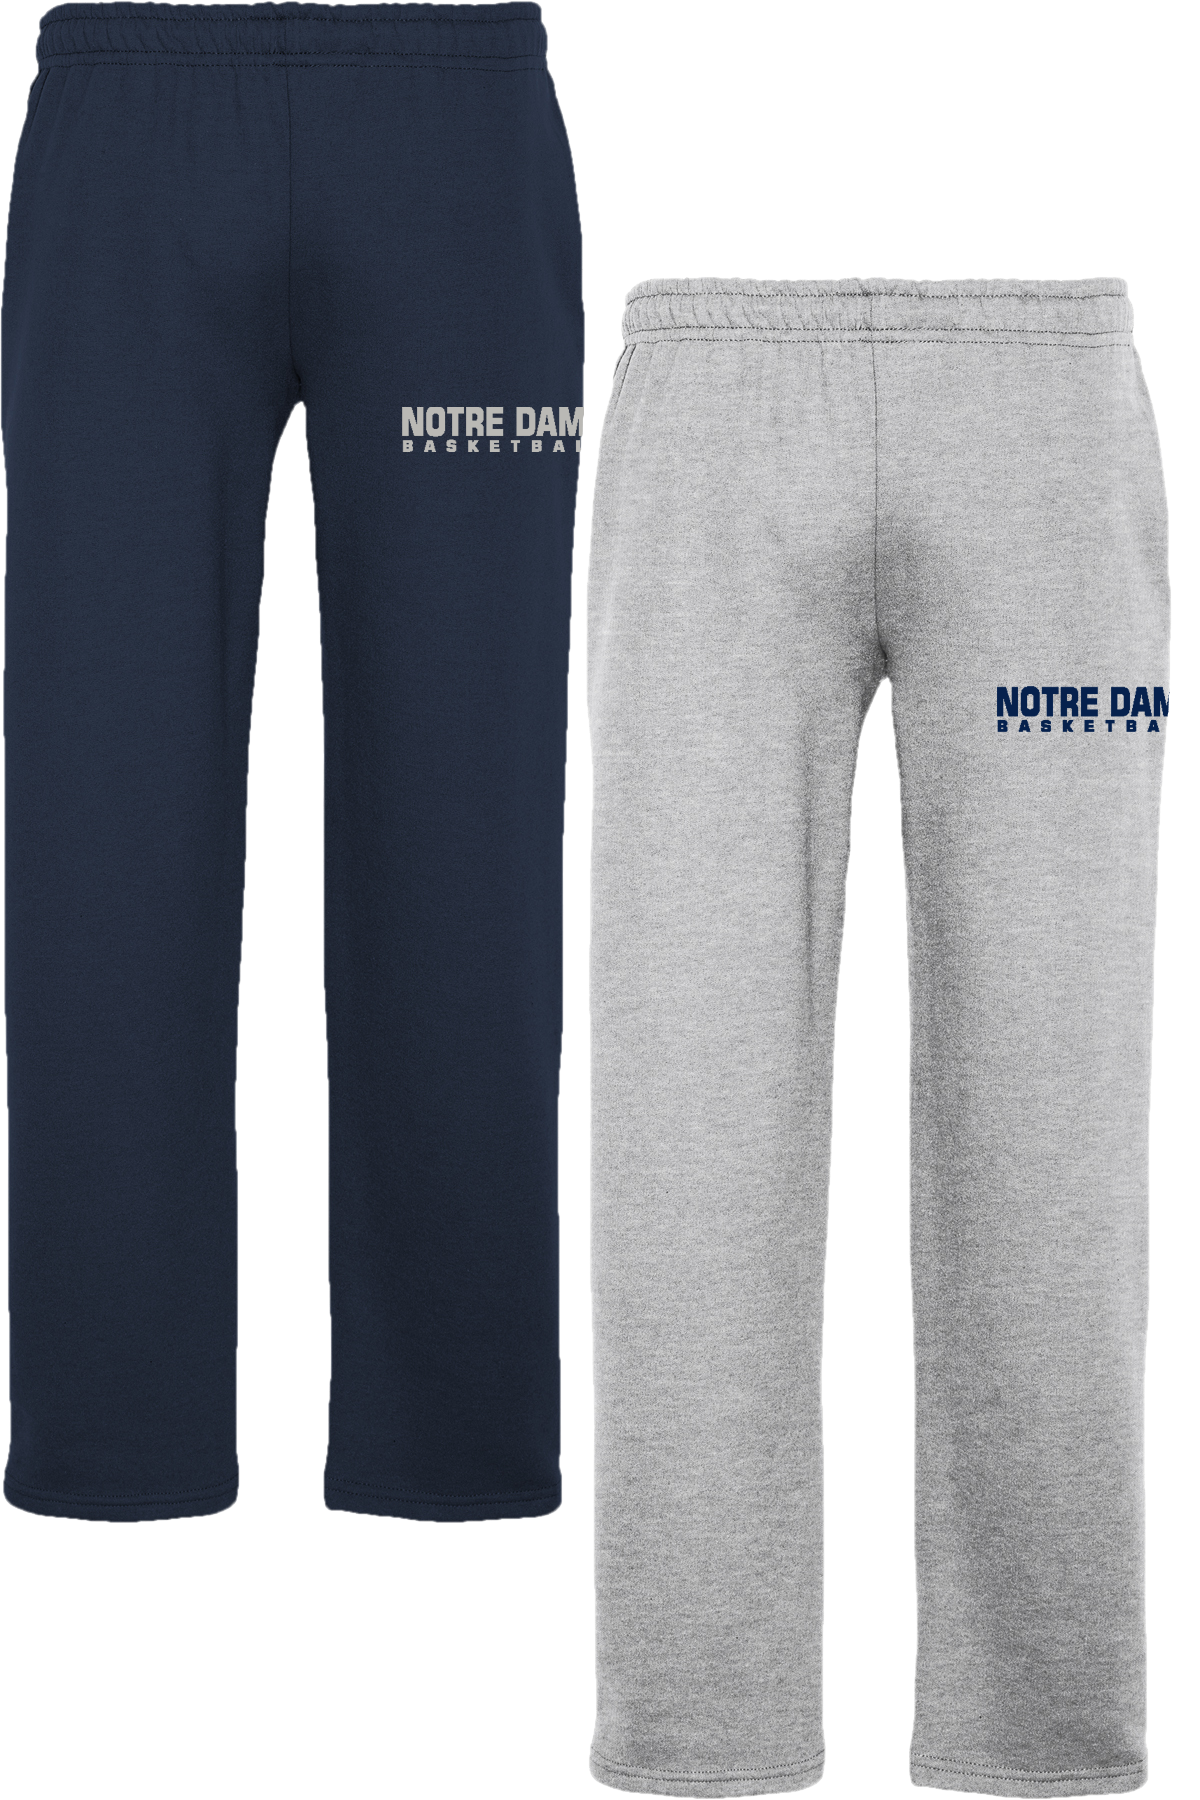 NDB Open Cuff Sweatpants -Sport Grey or Navy